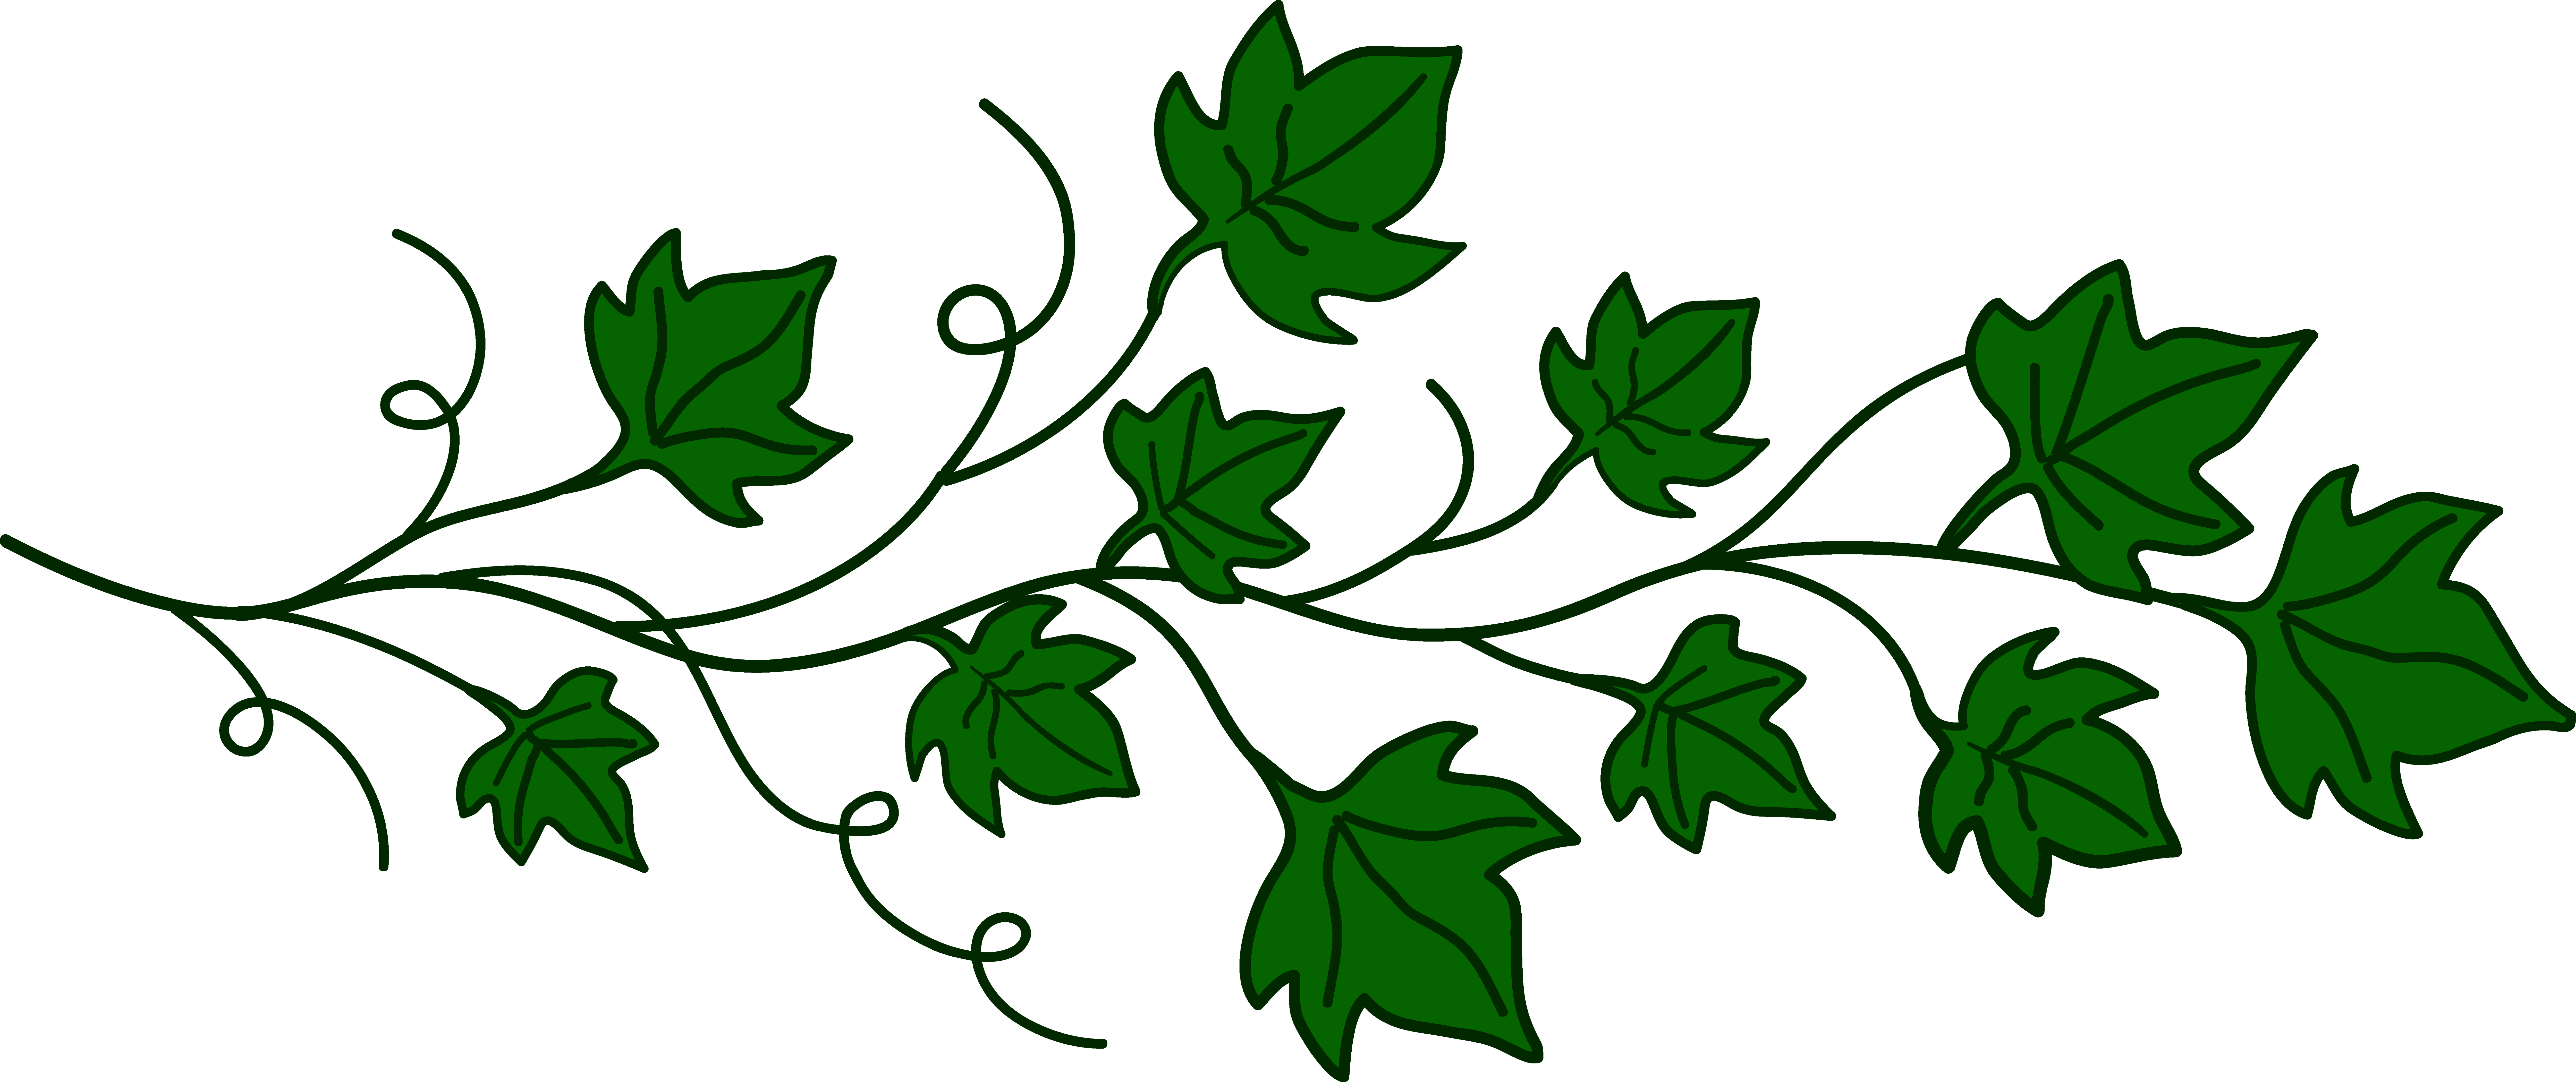 Vine of ivy leaves free clip art